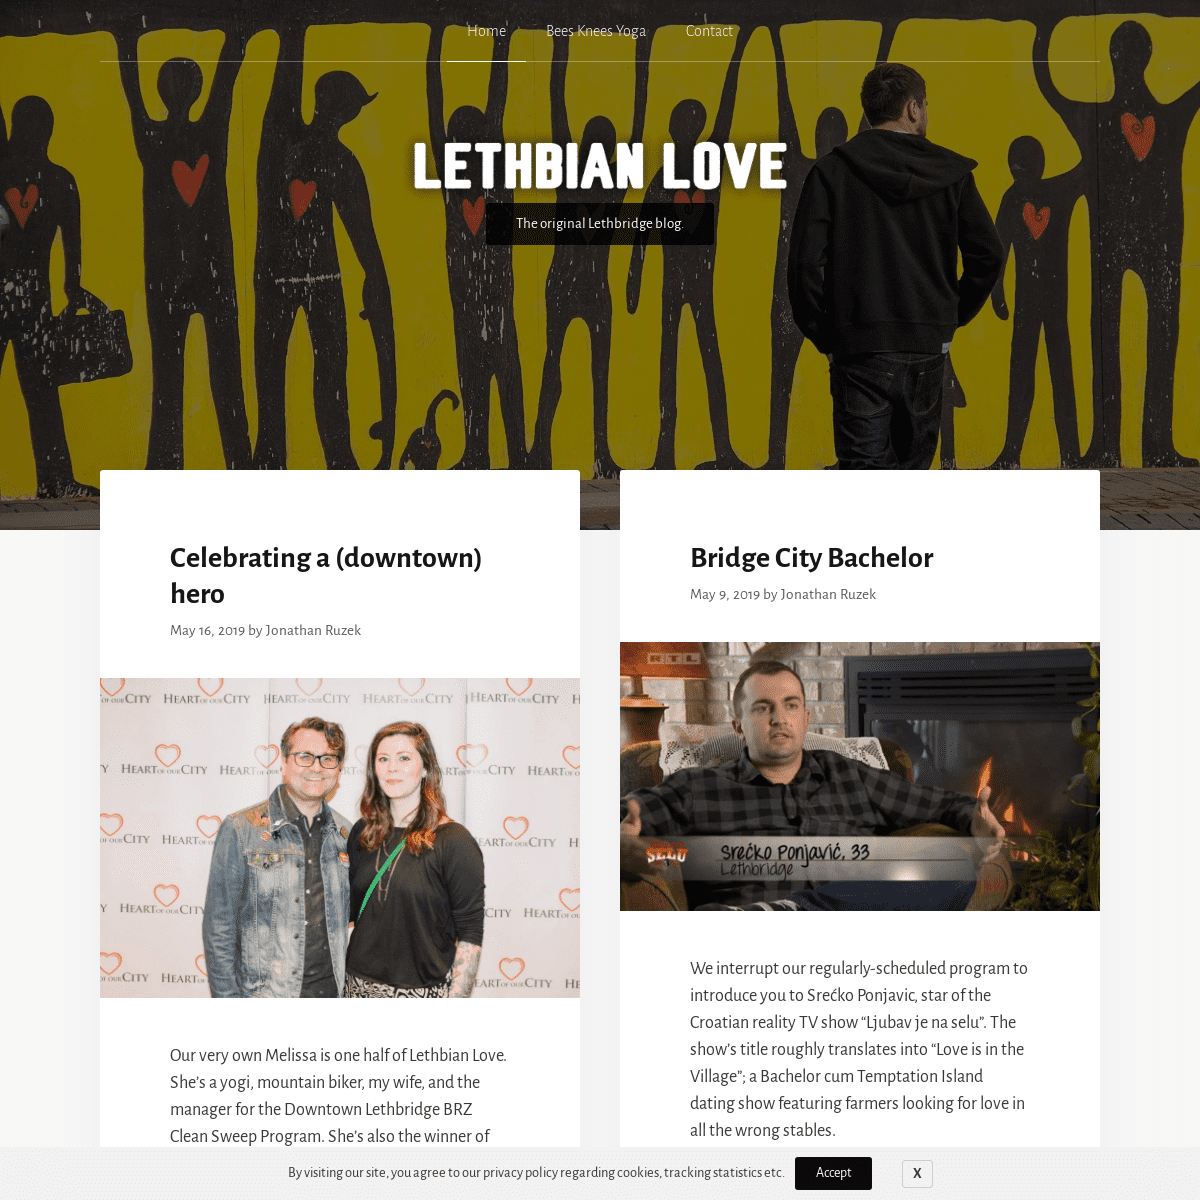 Lethbian Love, the original Lethbridge blog.